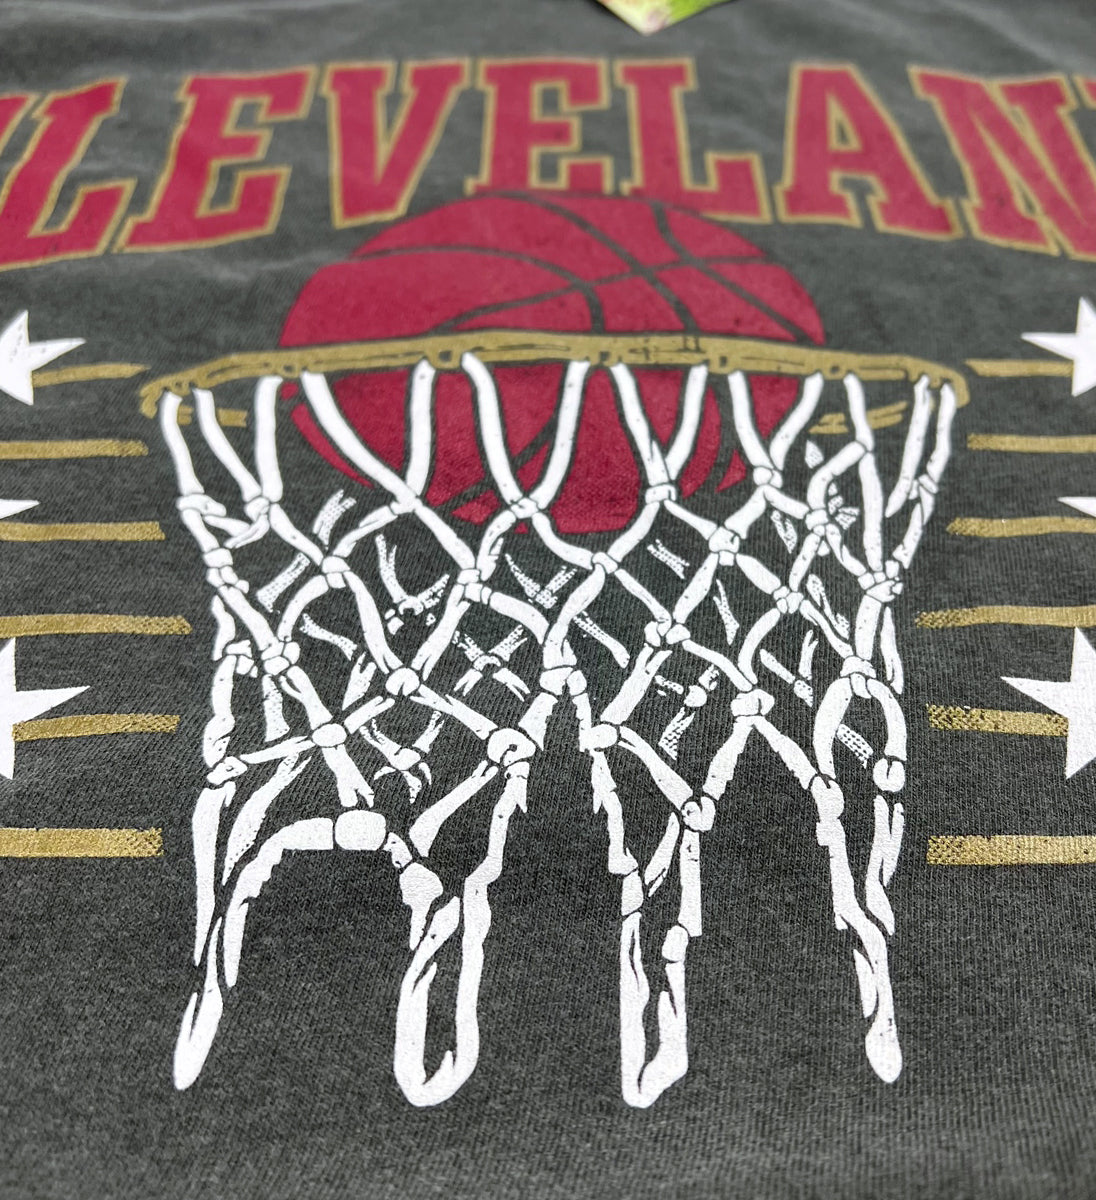 Cleveland Basketball Vintage Net Skyline T shirt